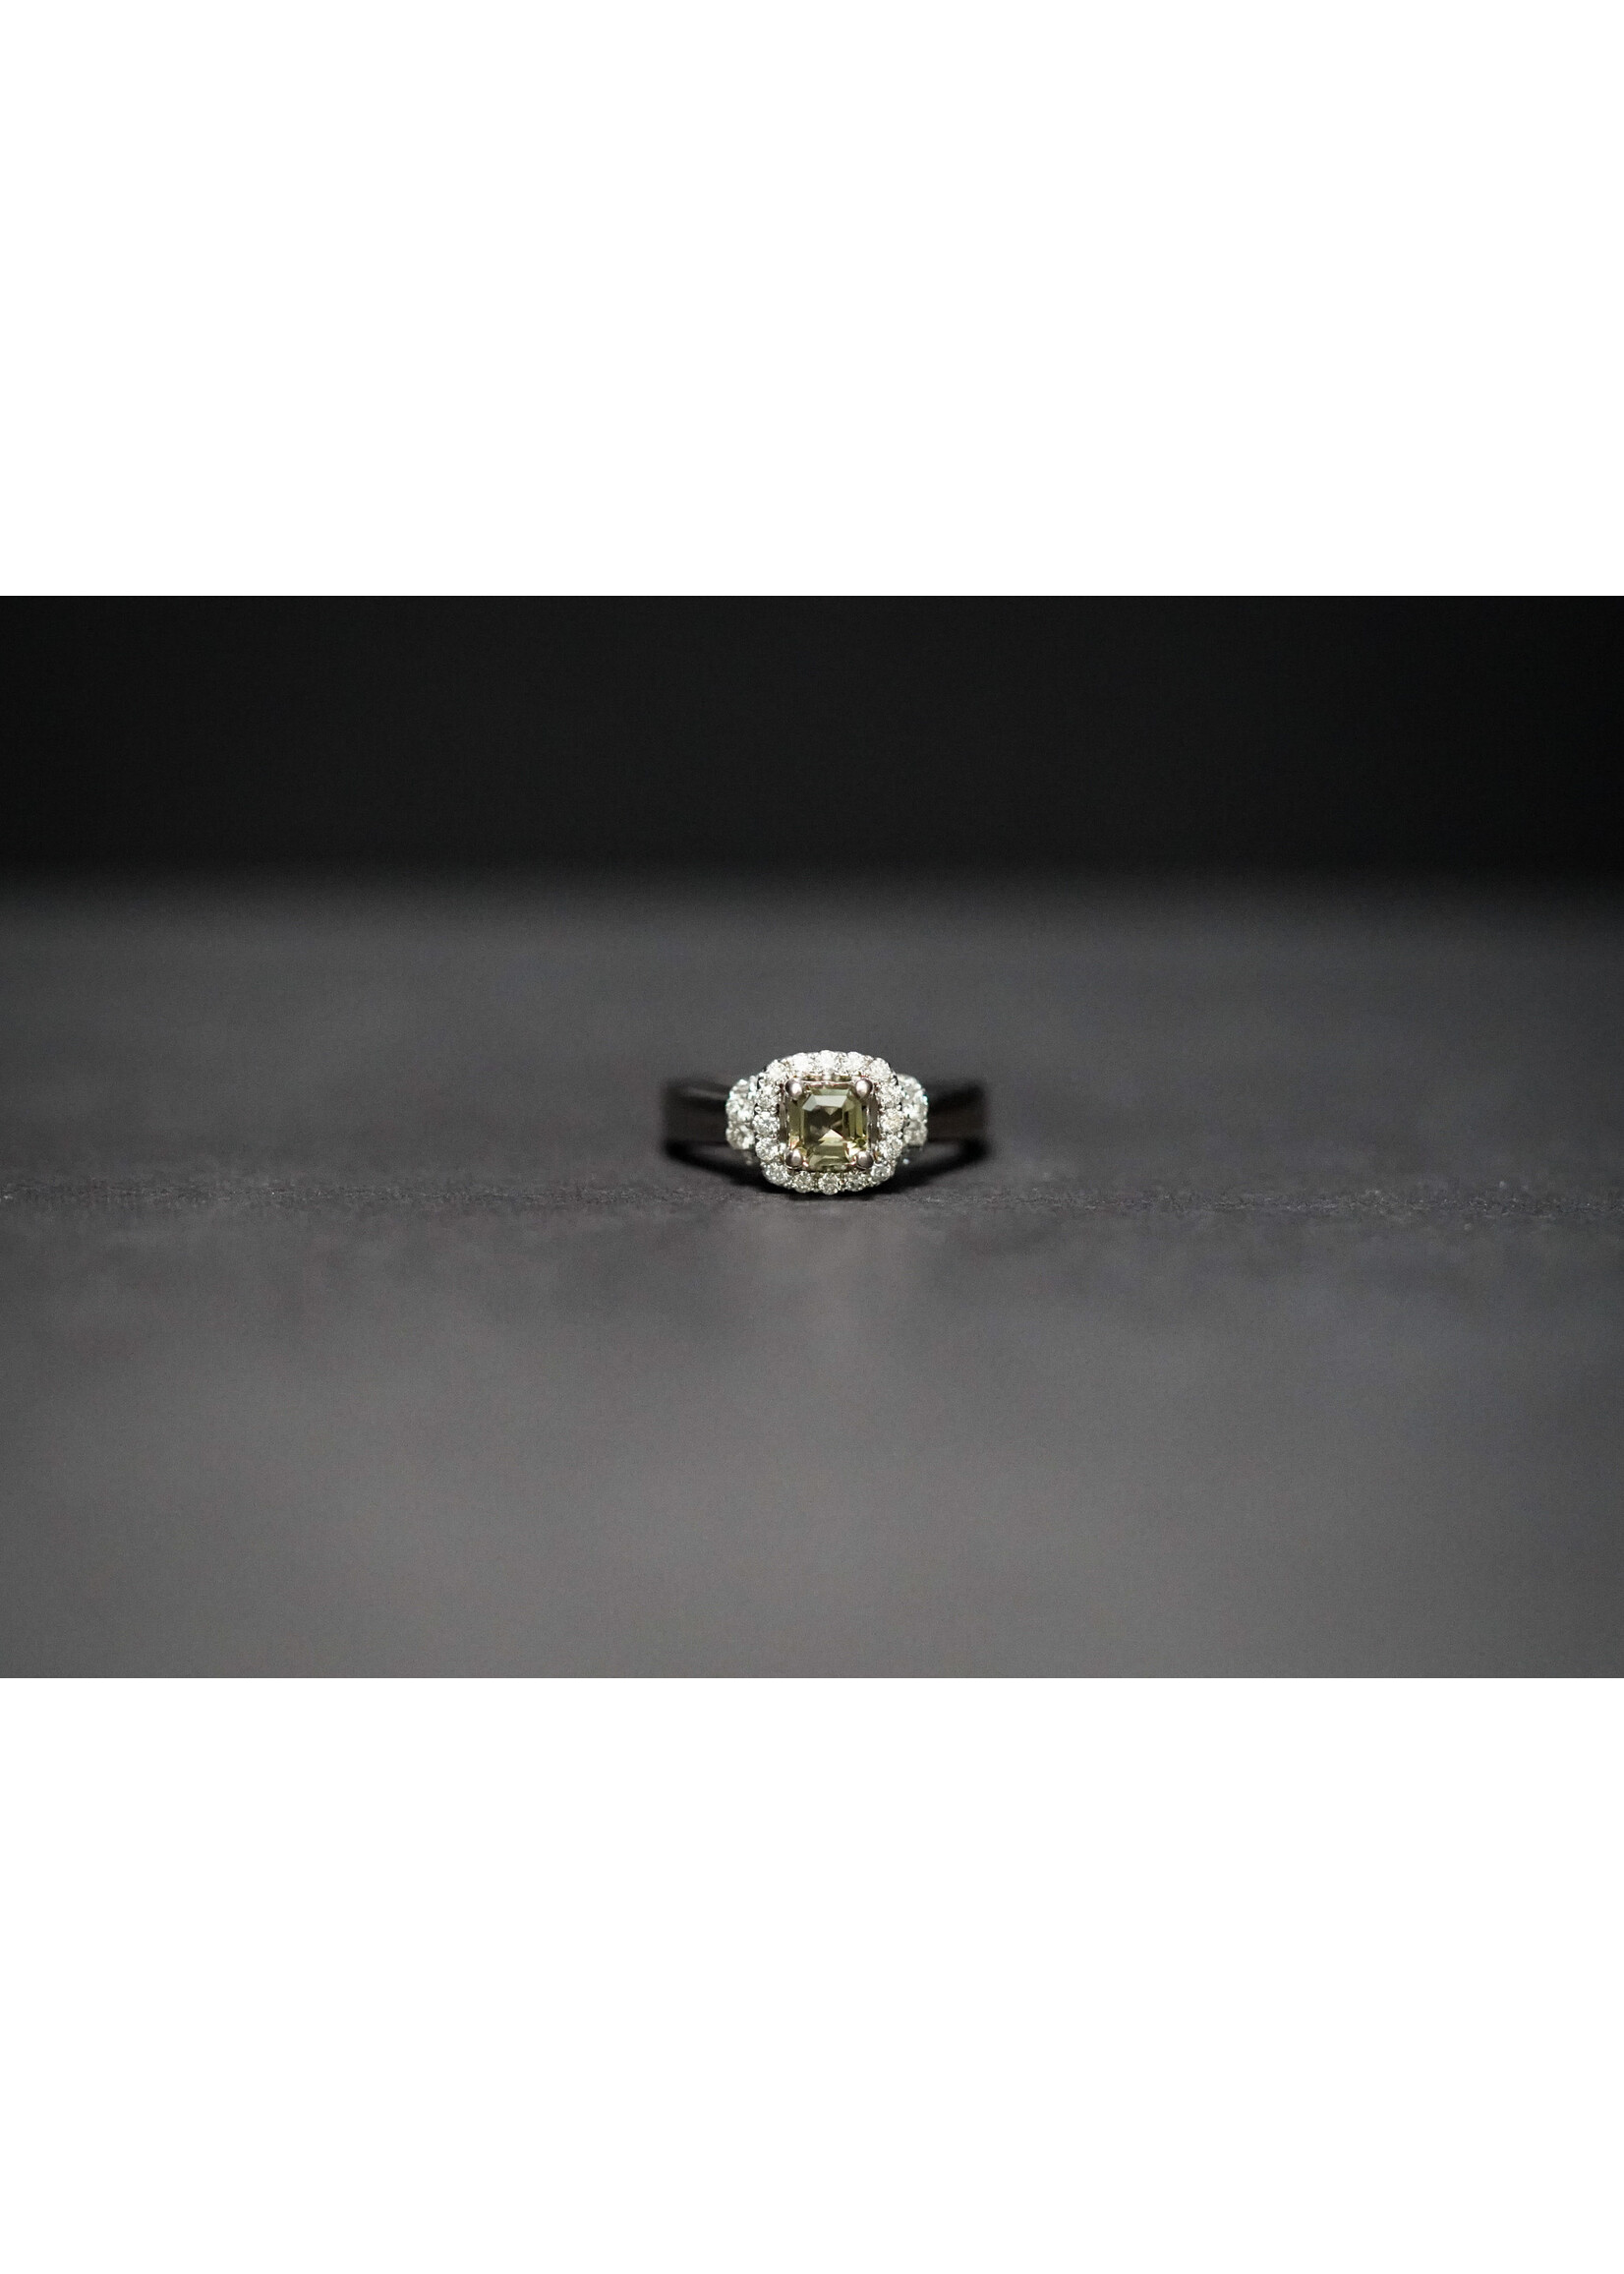 18KW 4.06g 1.03ctw (.58ctr) Sapphire & Diamond Halo Fashion Ring (size 5.75)